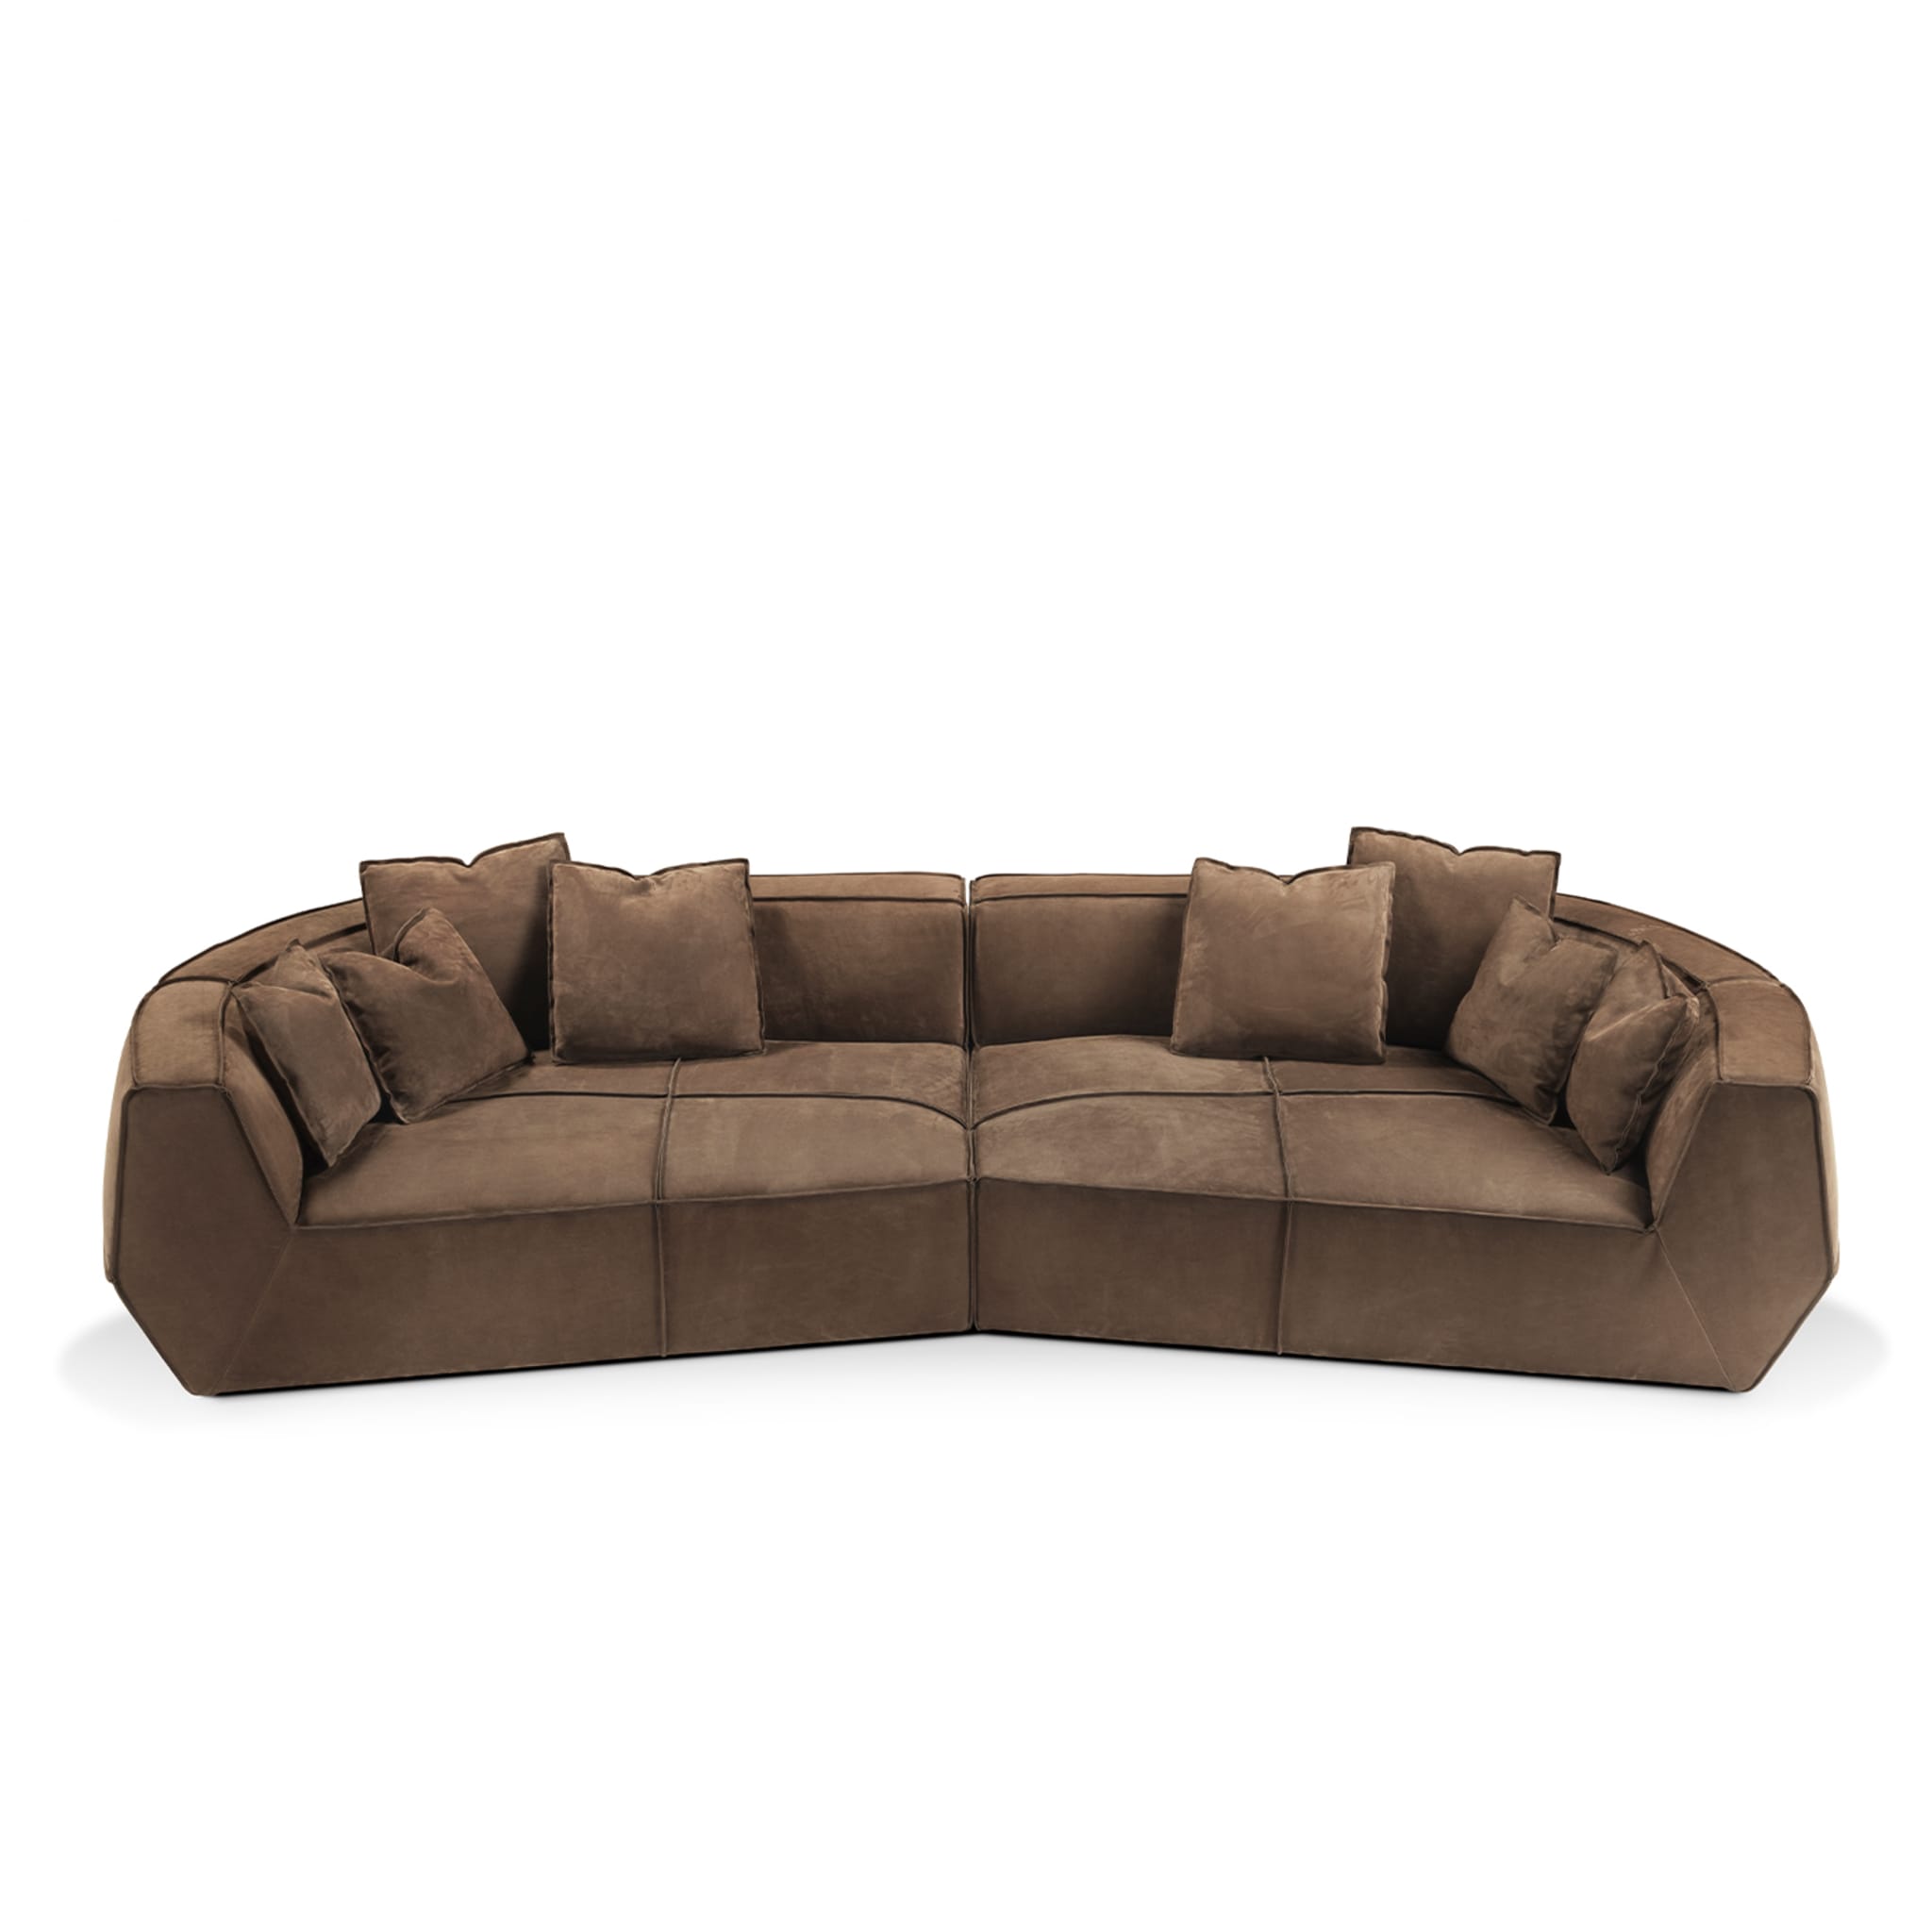 Infinito Medium Brown Sofa by Lorenza Bozzoli - Alternative view 4